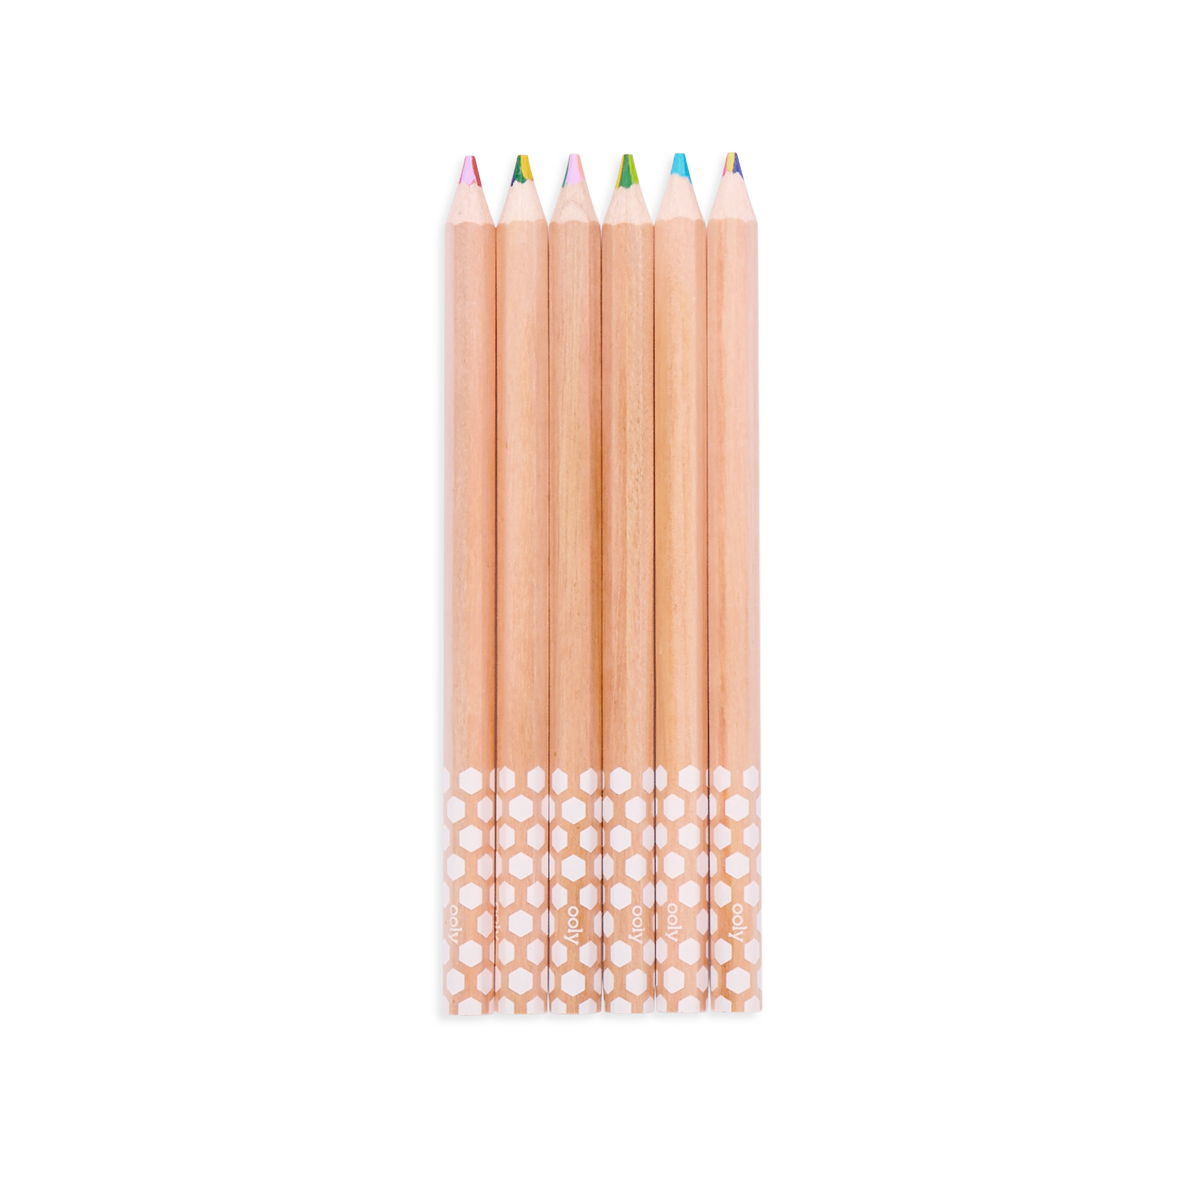 Ooly - Erasable Colored Pencils